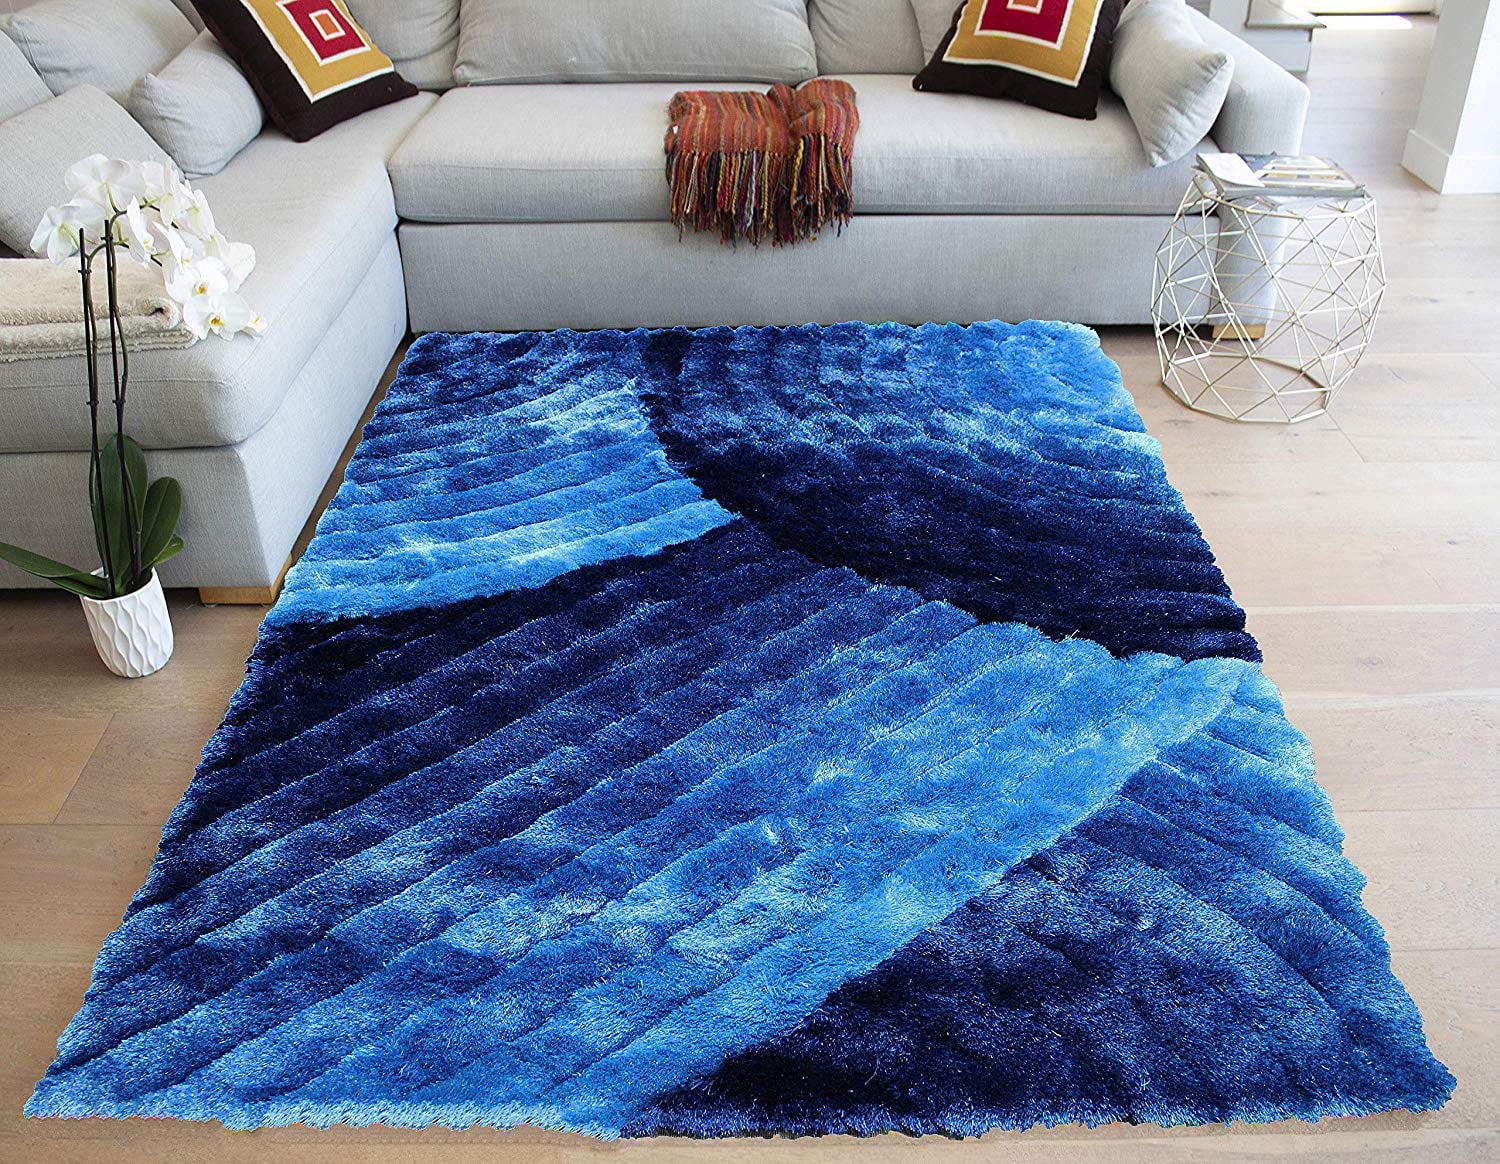 blue living room carpet